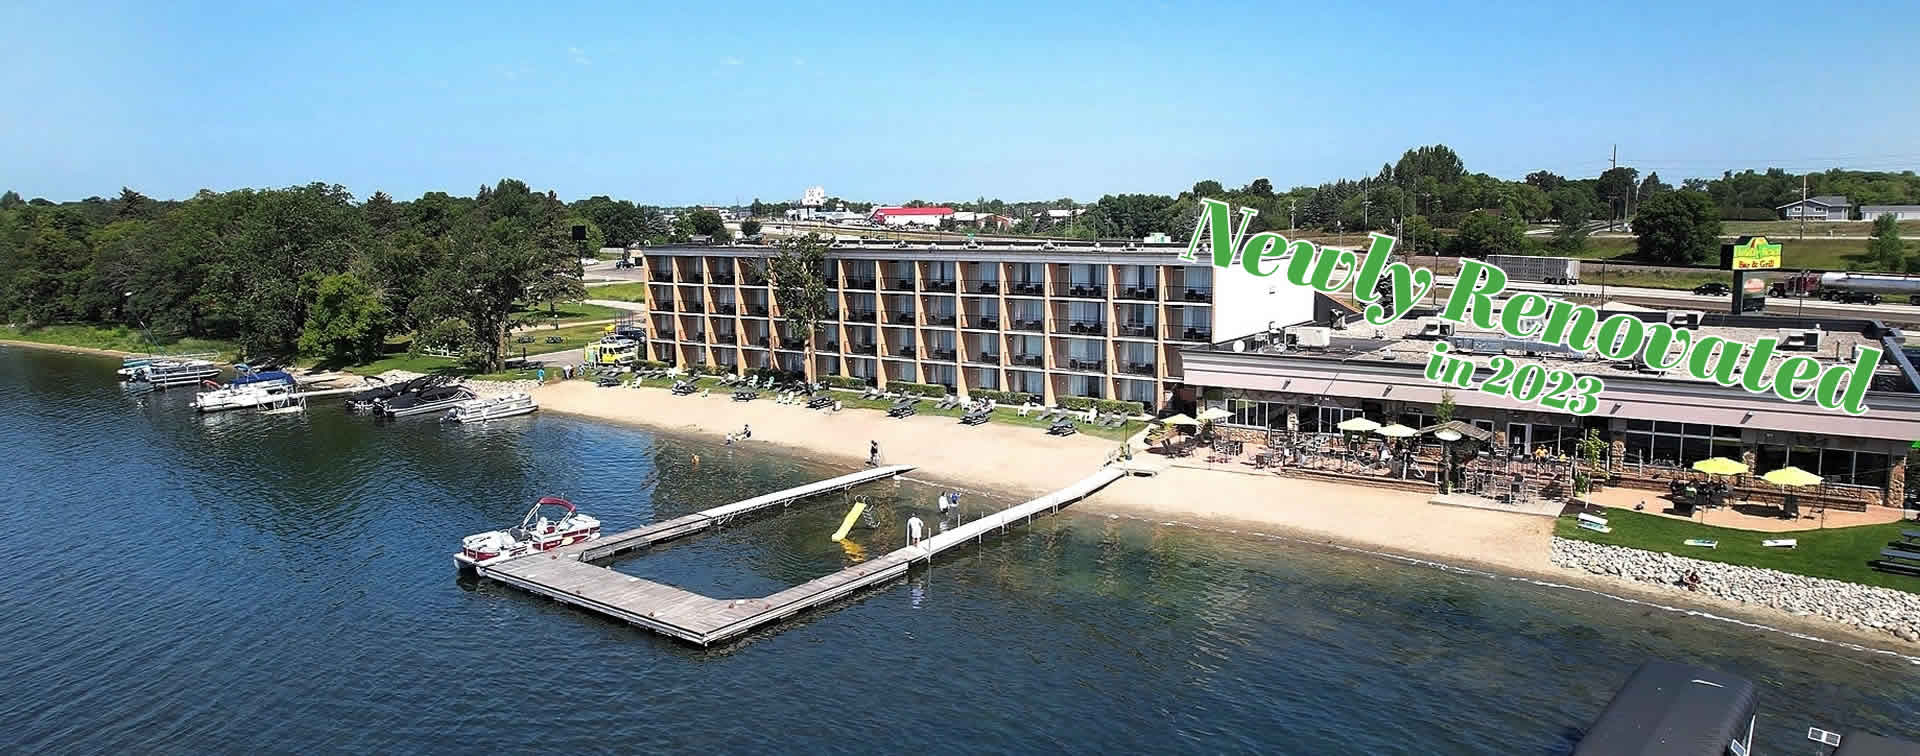 Holiday Inn Hotel in Detroit Lakes, Minnesota